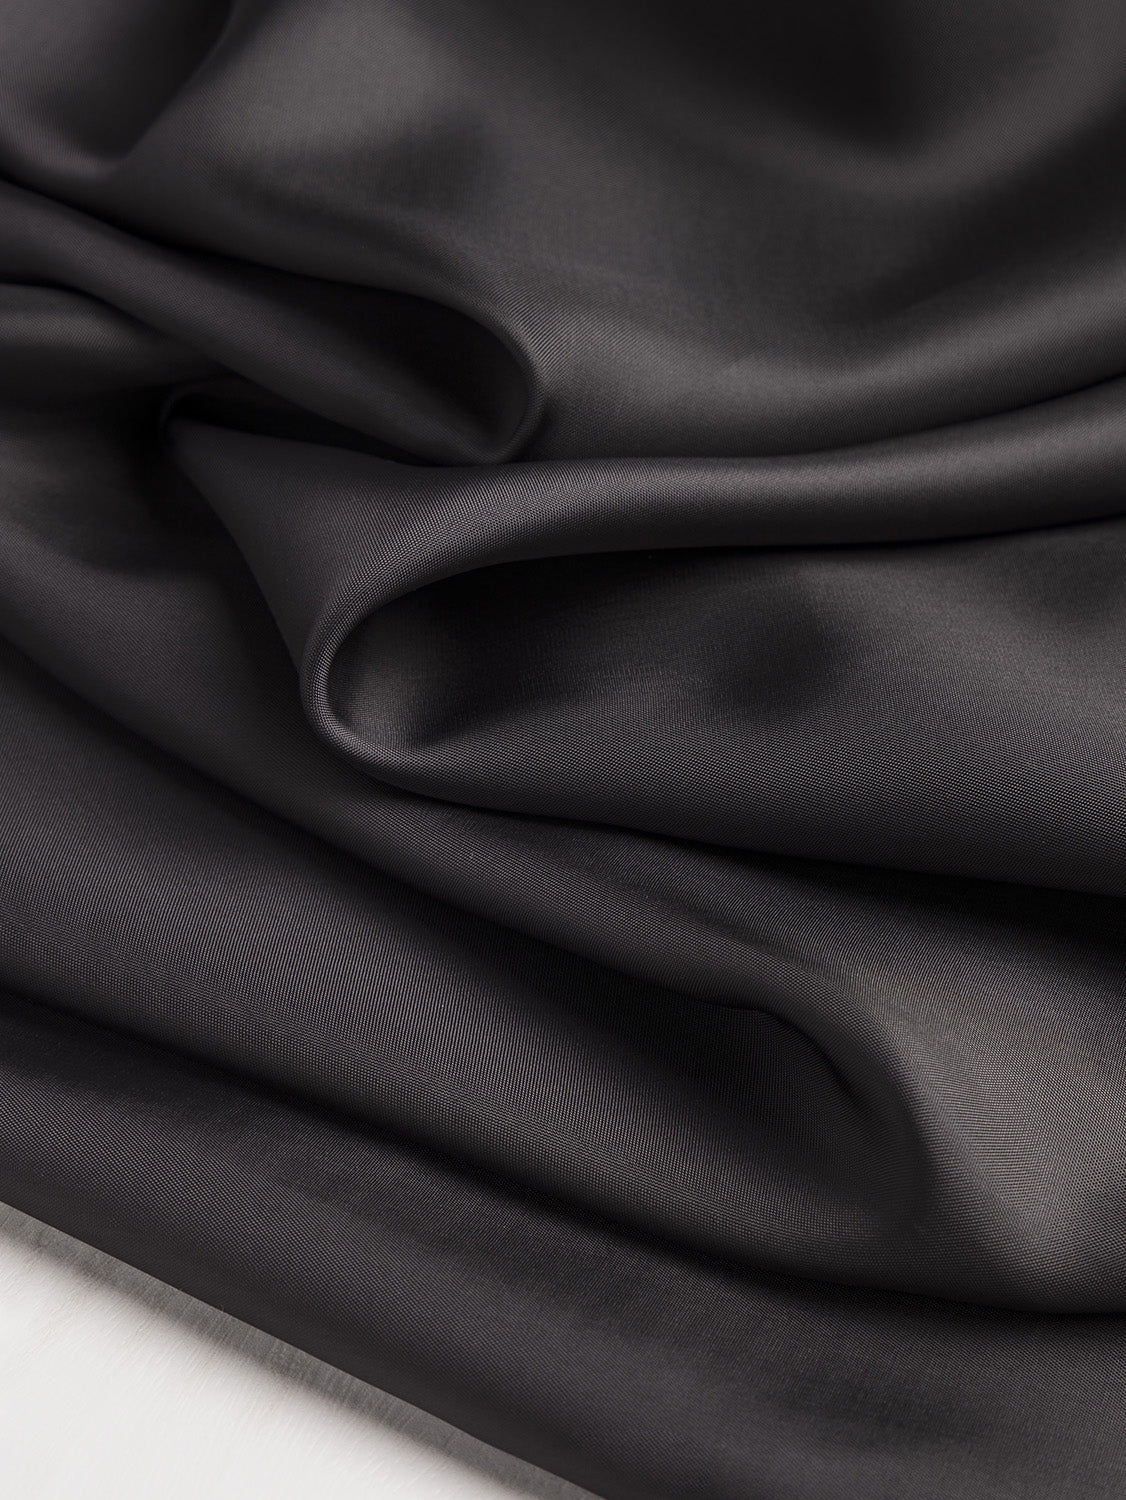 Bemberg Cupro Lining - Black | Core Fabrics